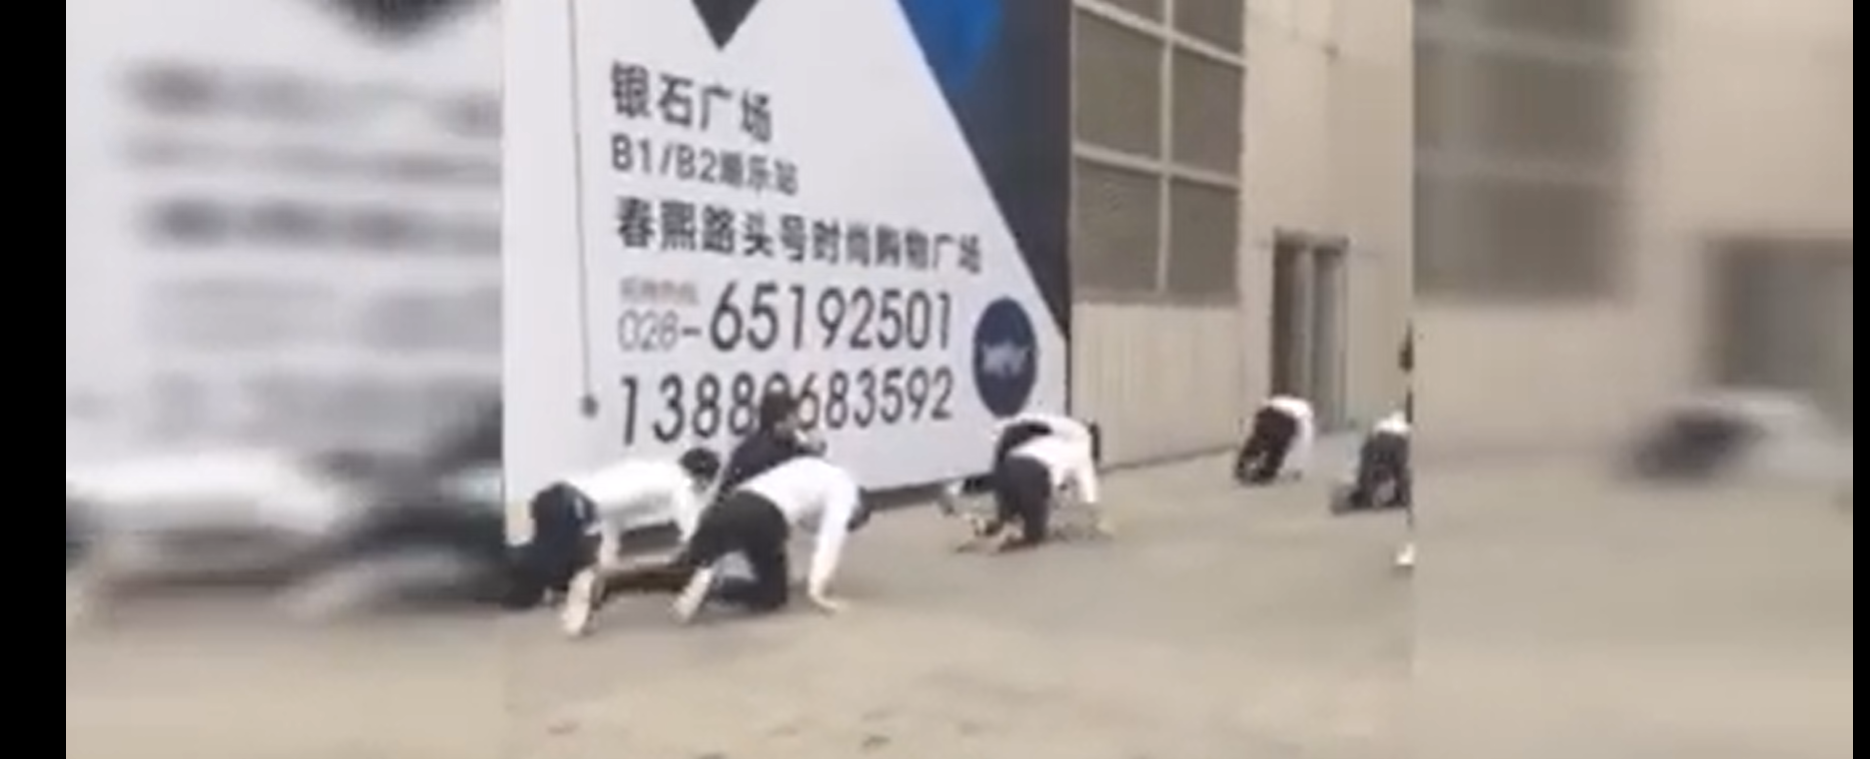 Employees Crawl in Public as Punishment